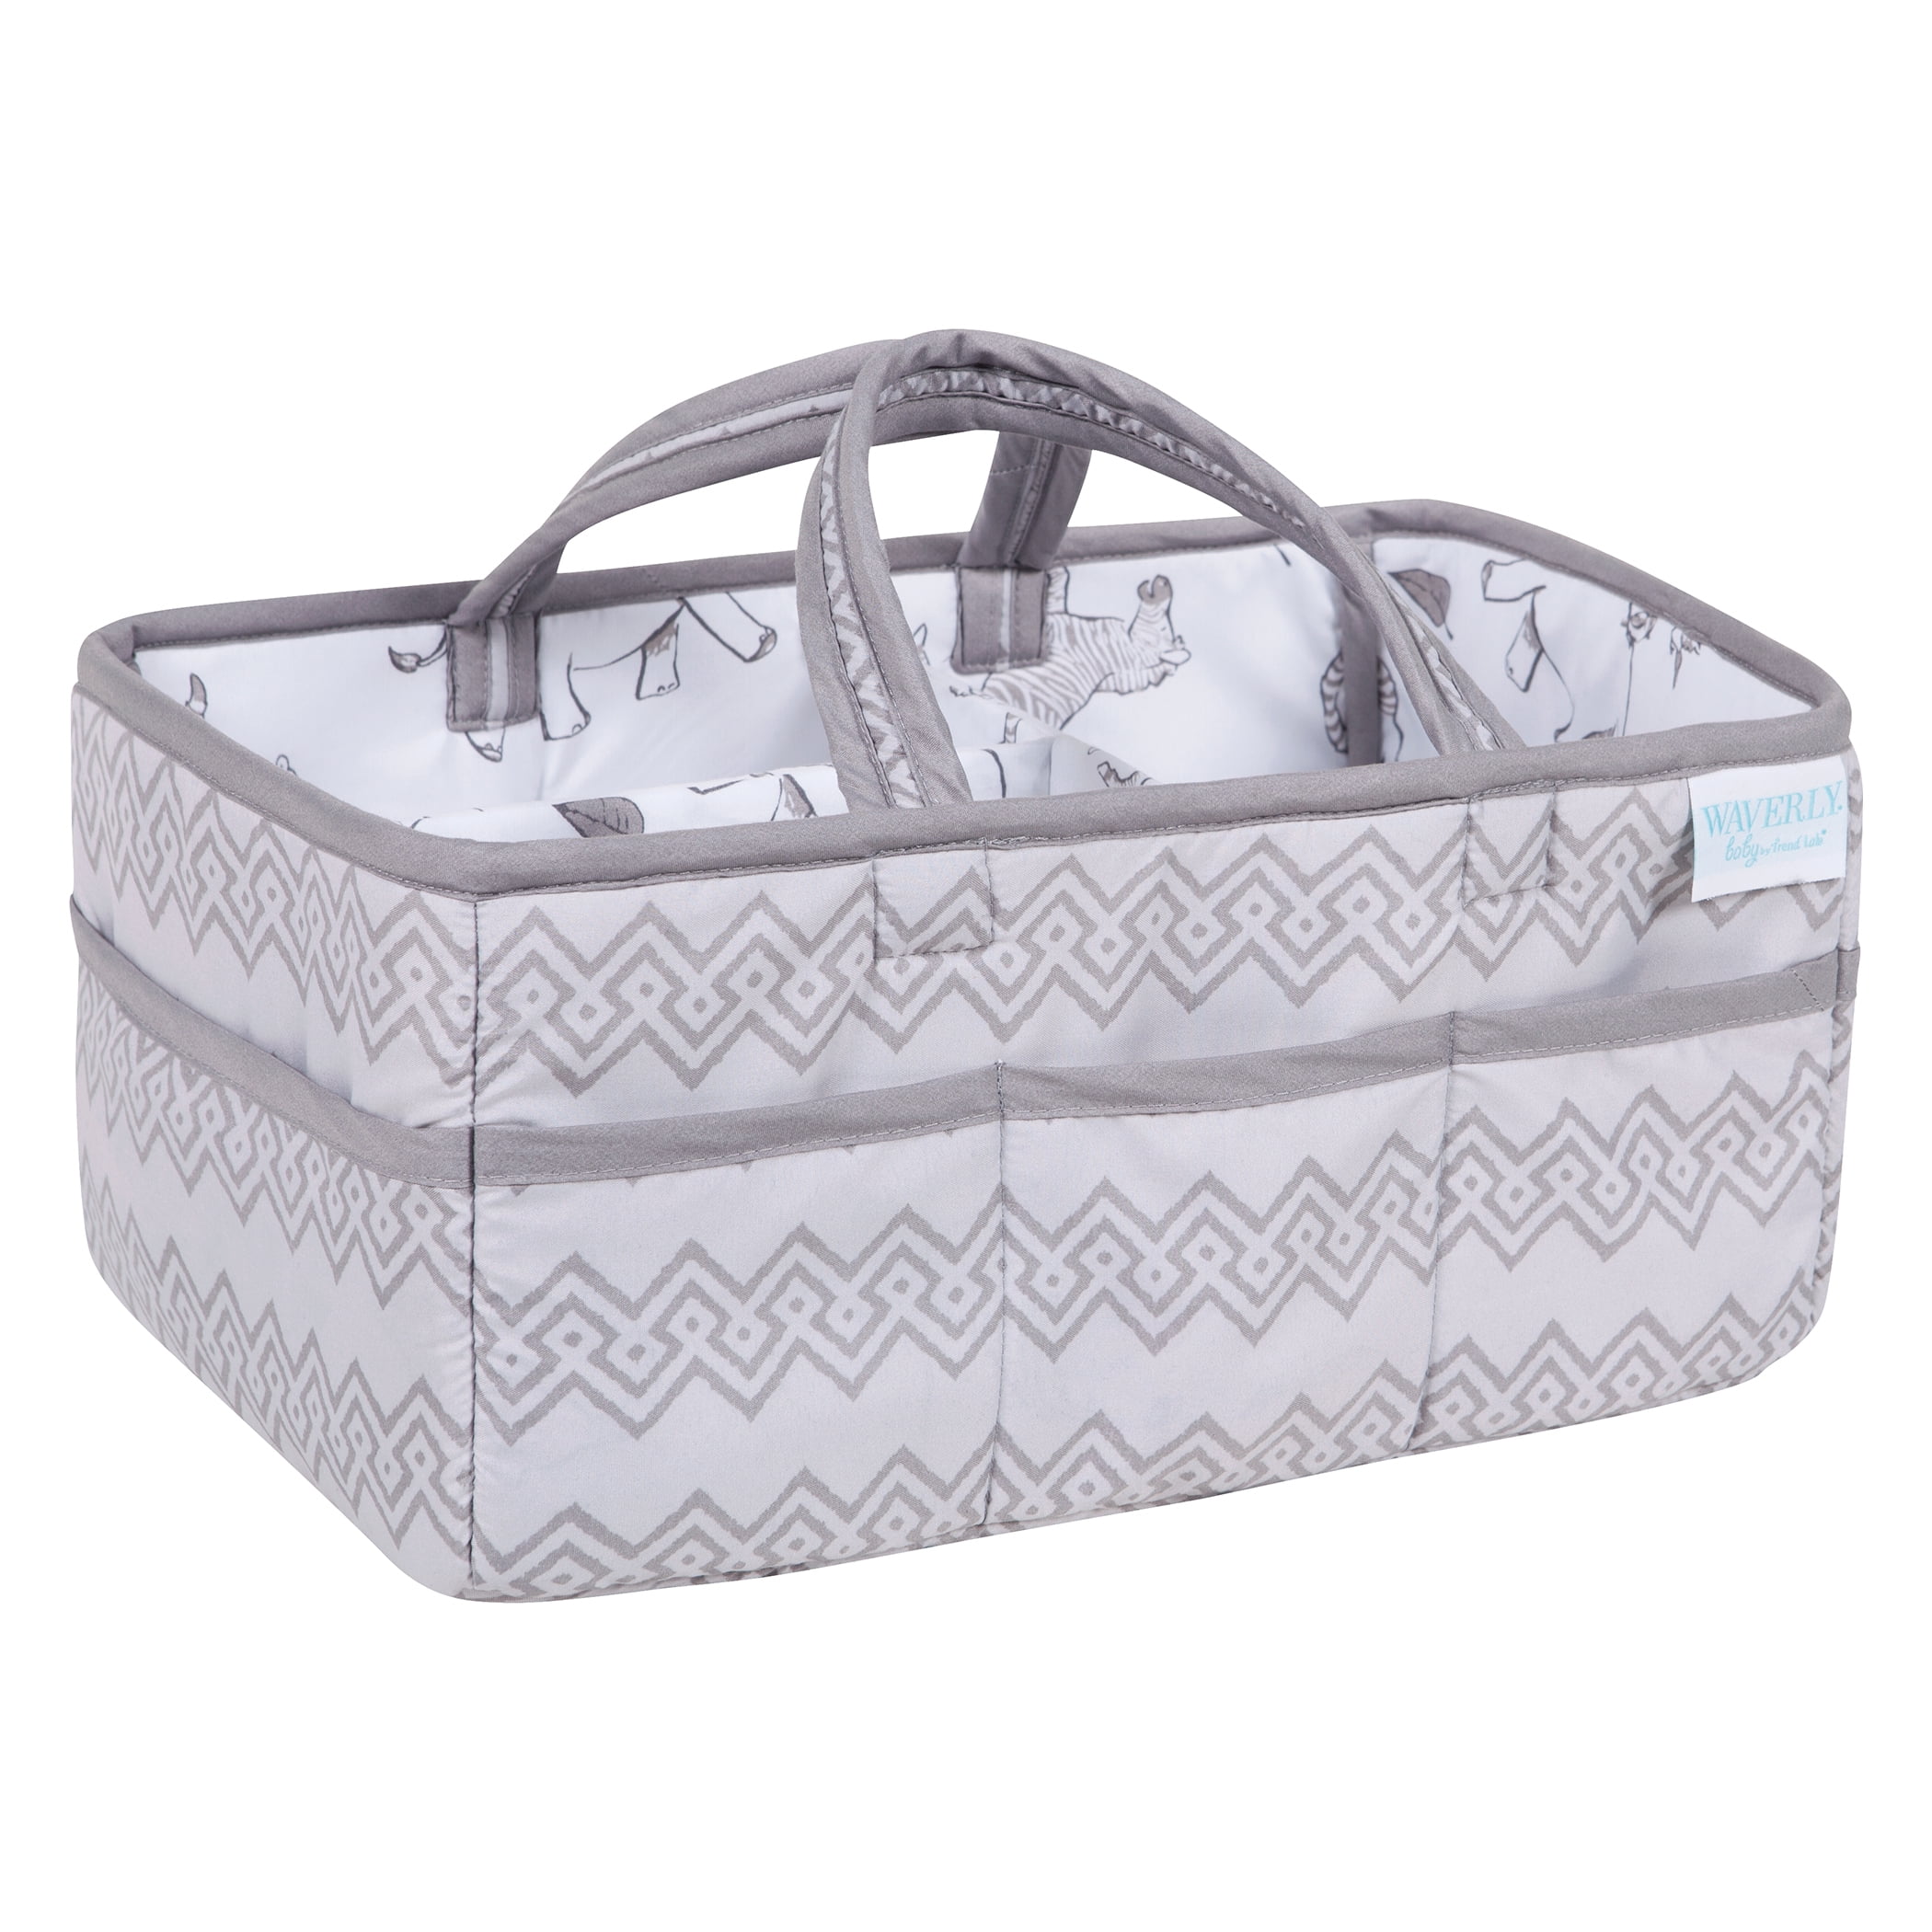 Munchkin Portable Diaper Caddy Organizer, Includes Wipeable 